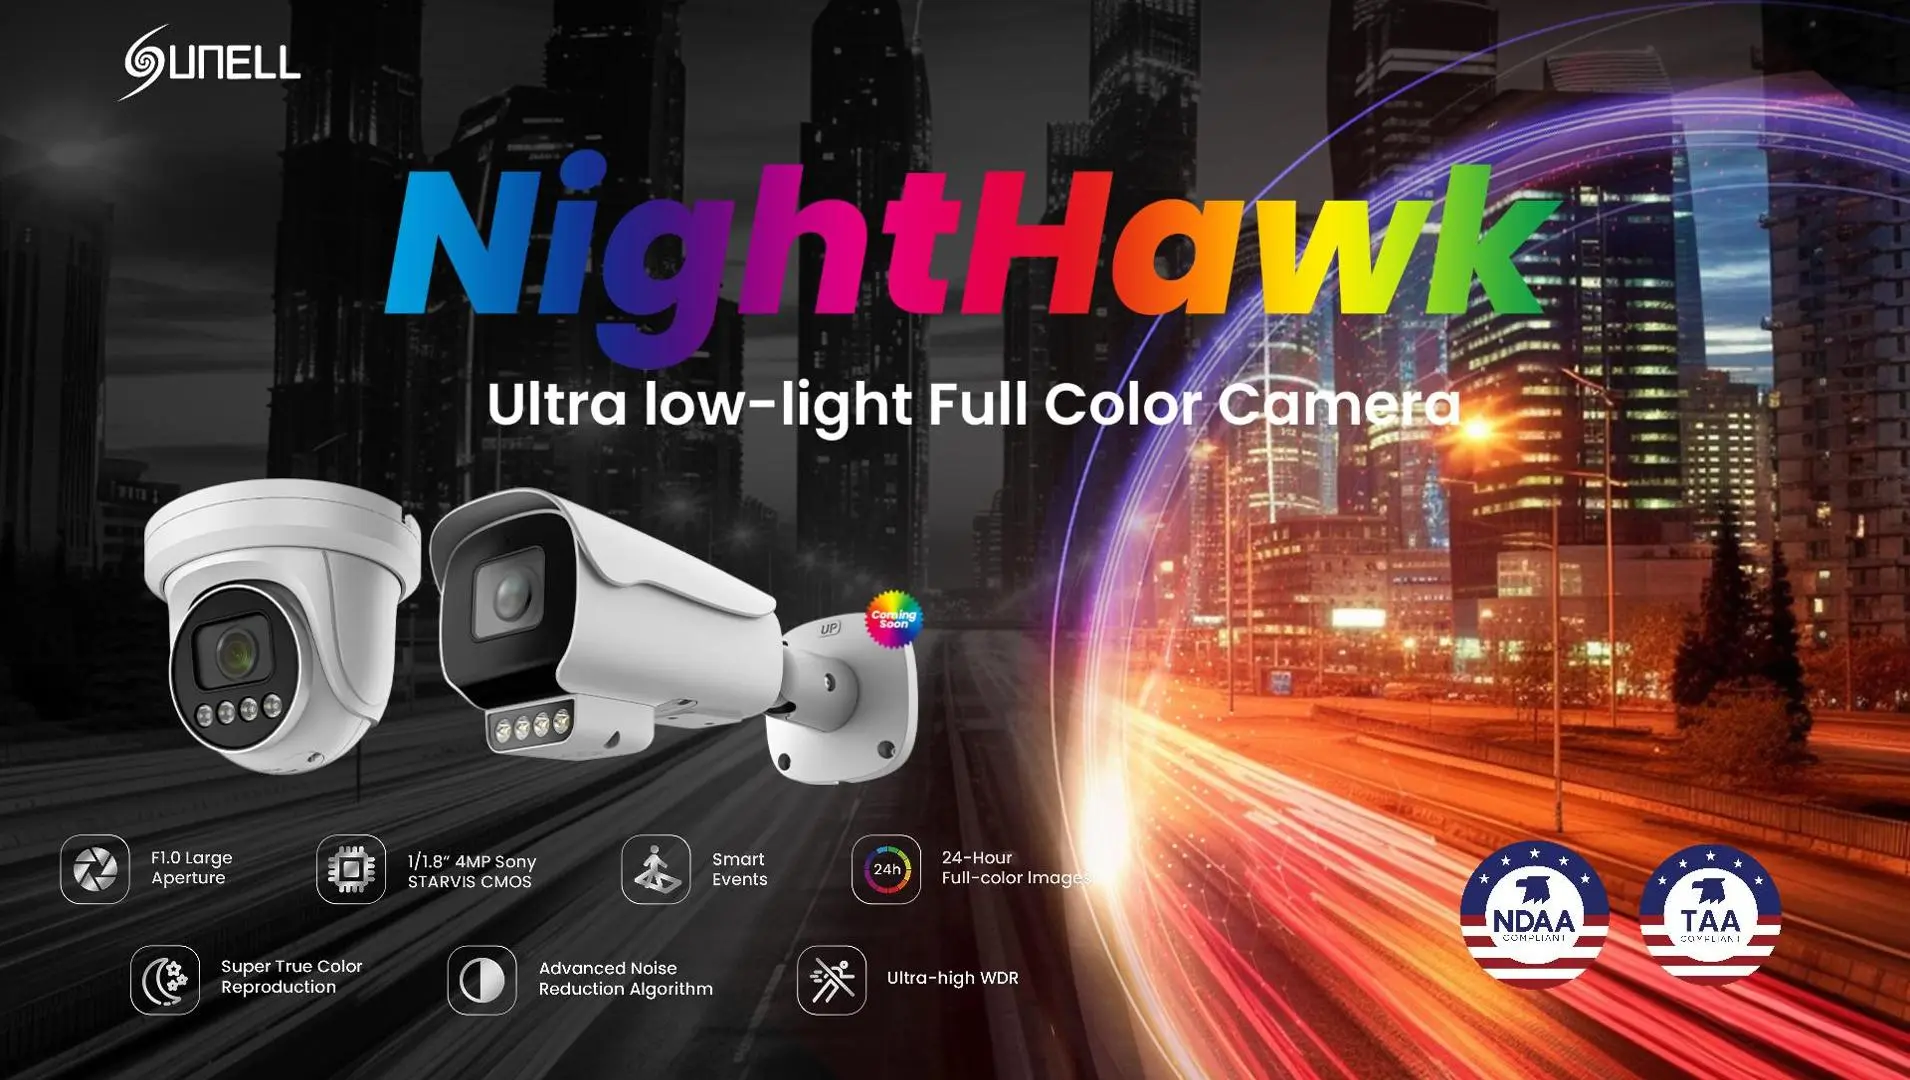 Sunell Nighthawk Cámara inteligente a todo color con luz ultrabaja